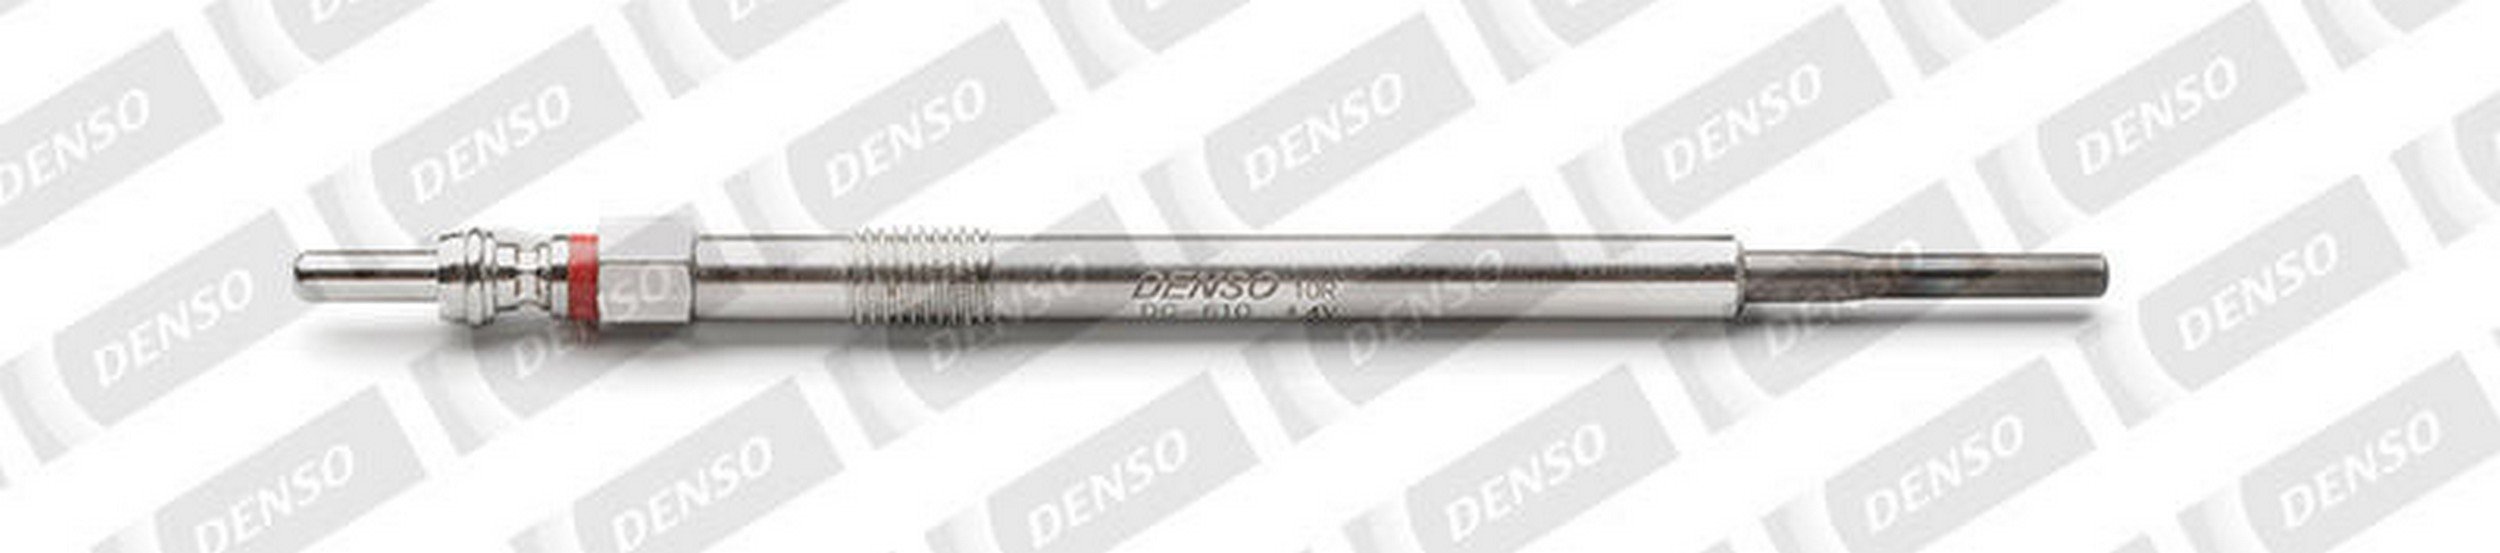 DENSO-AU DG-610